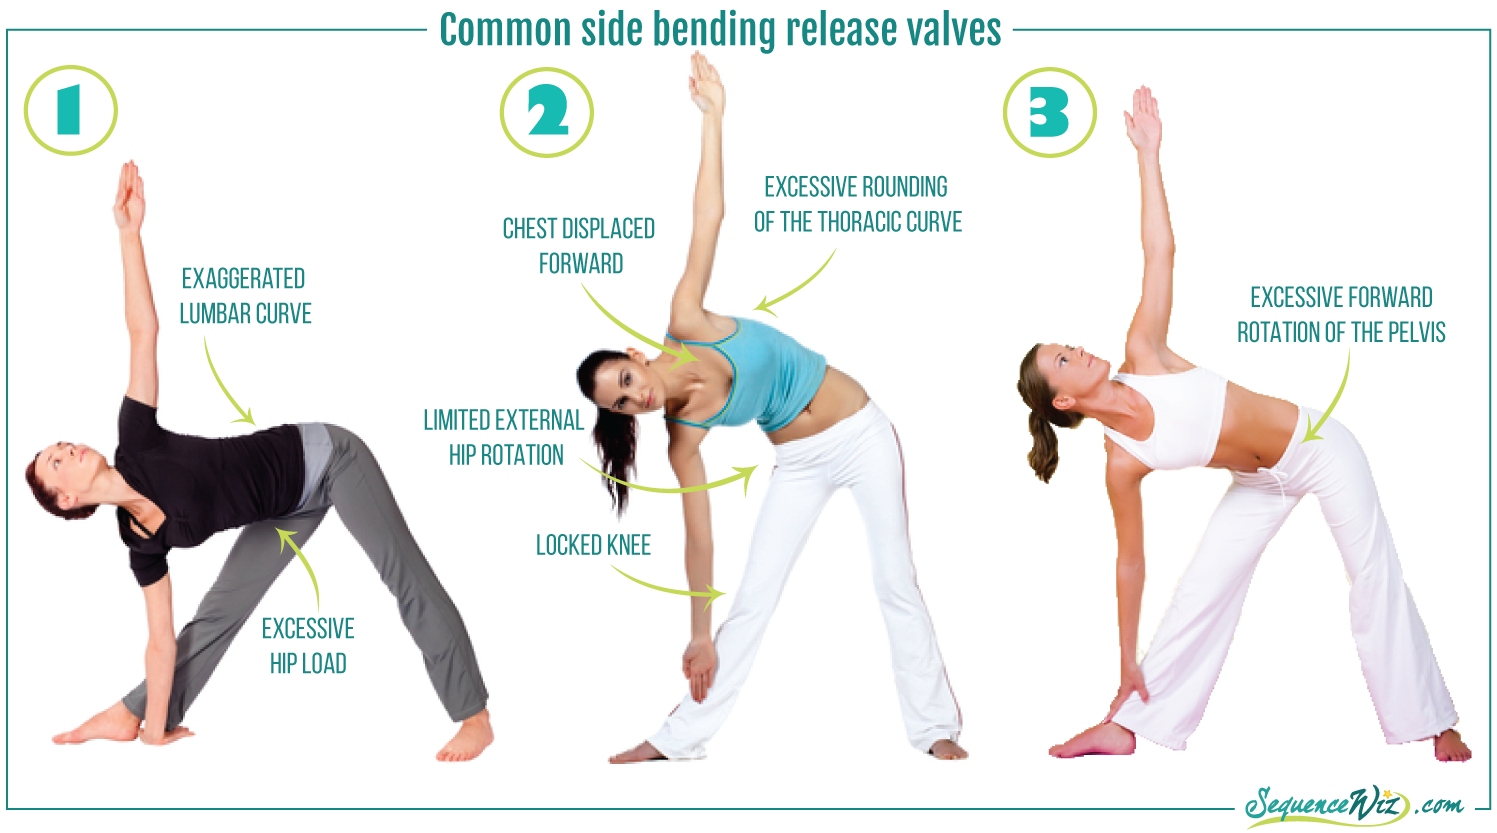 Avoid common pitfalls while bending sideways